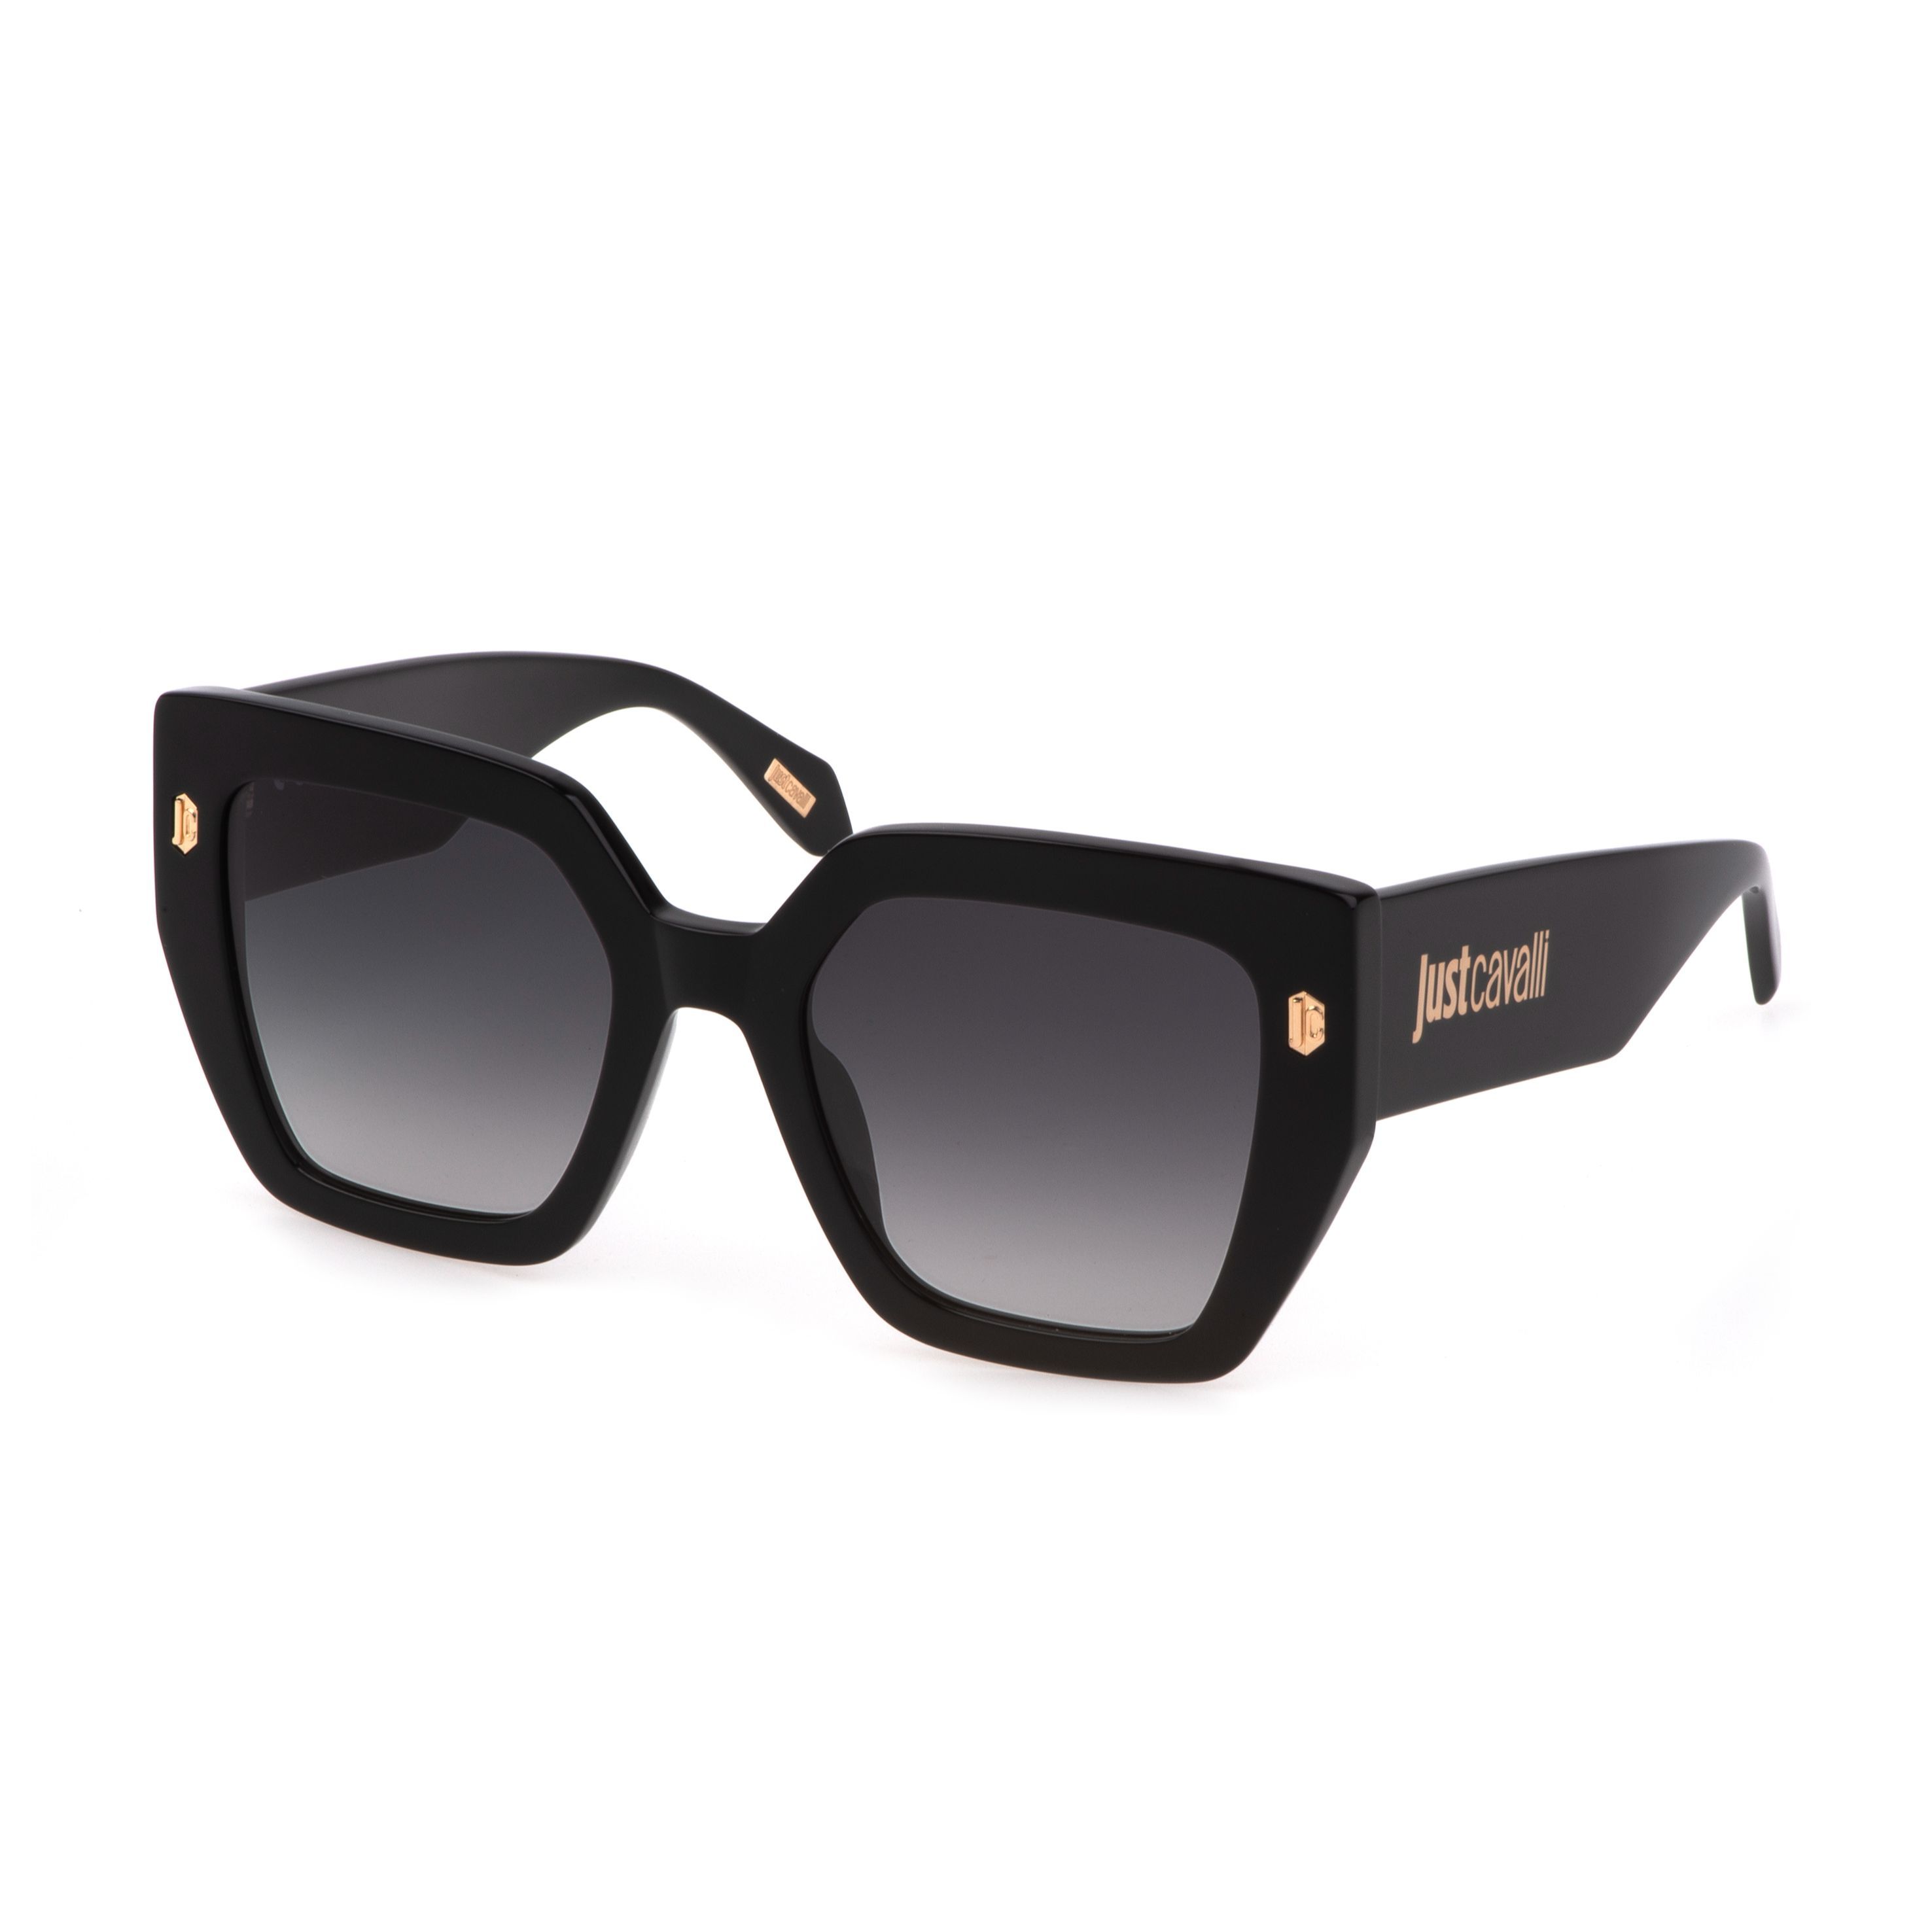 SJC021 Square Sunglasses 700 - size 53